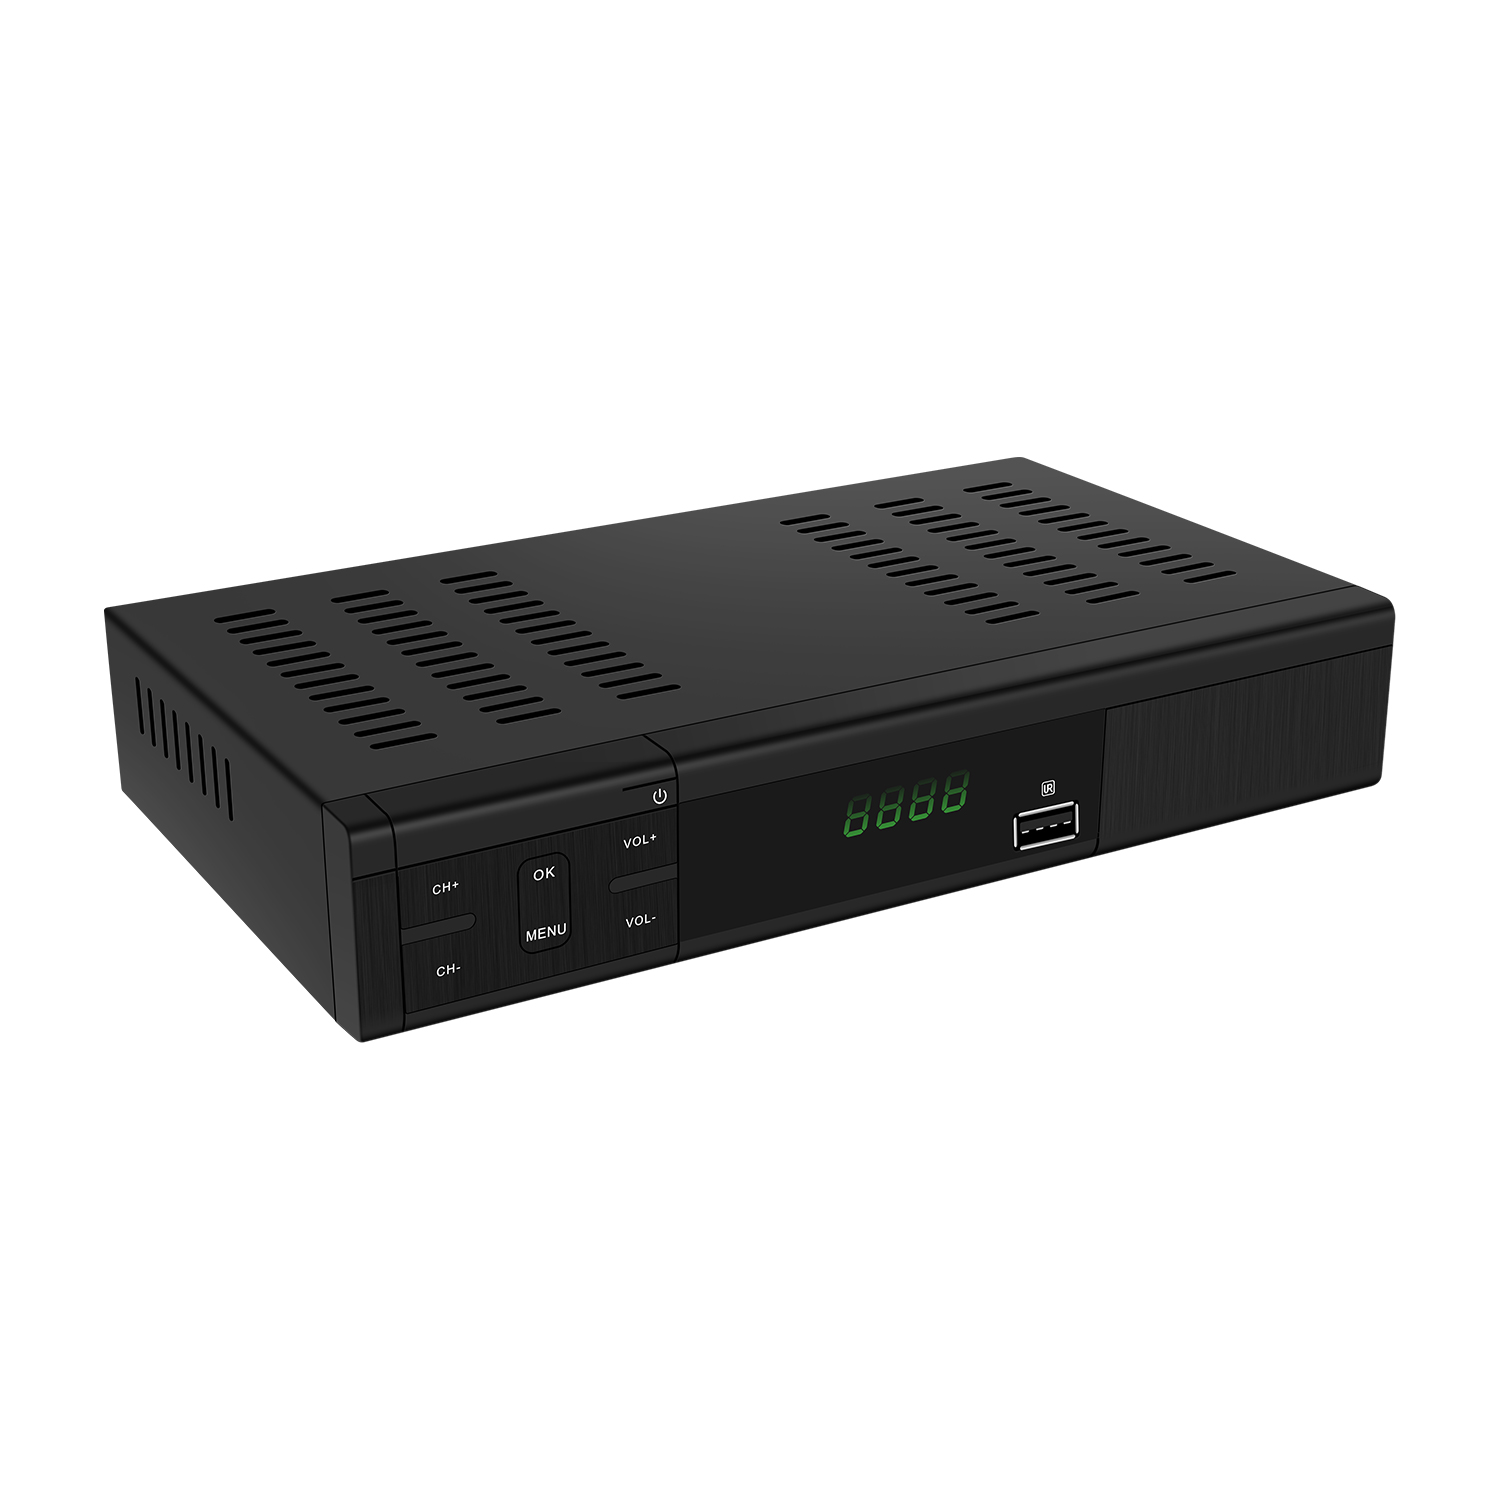 DVB T2+S2 combo set top box